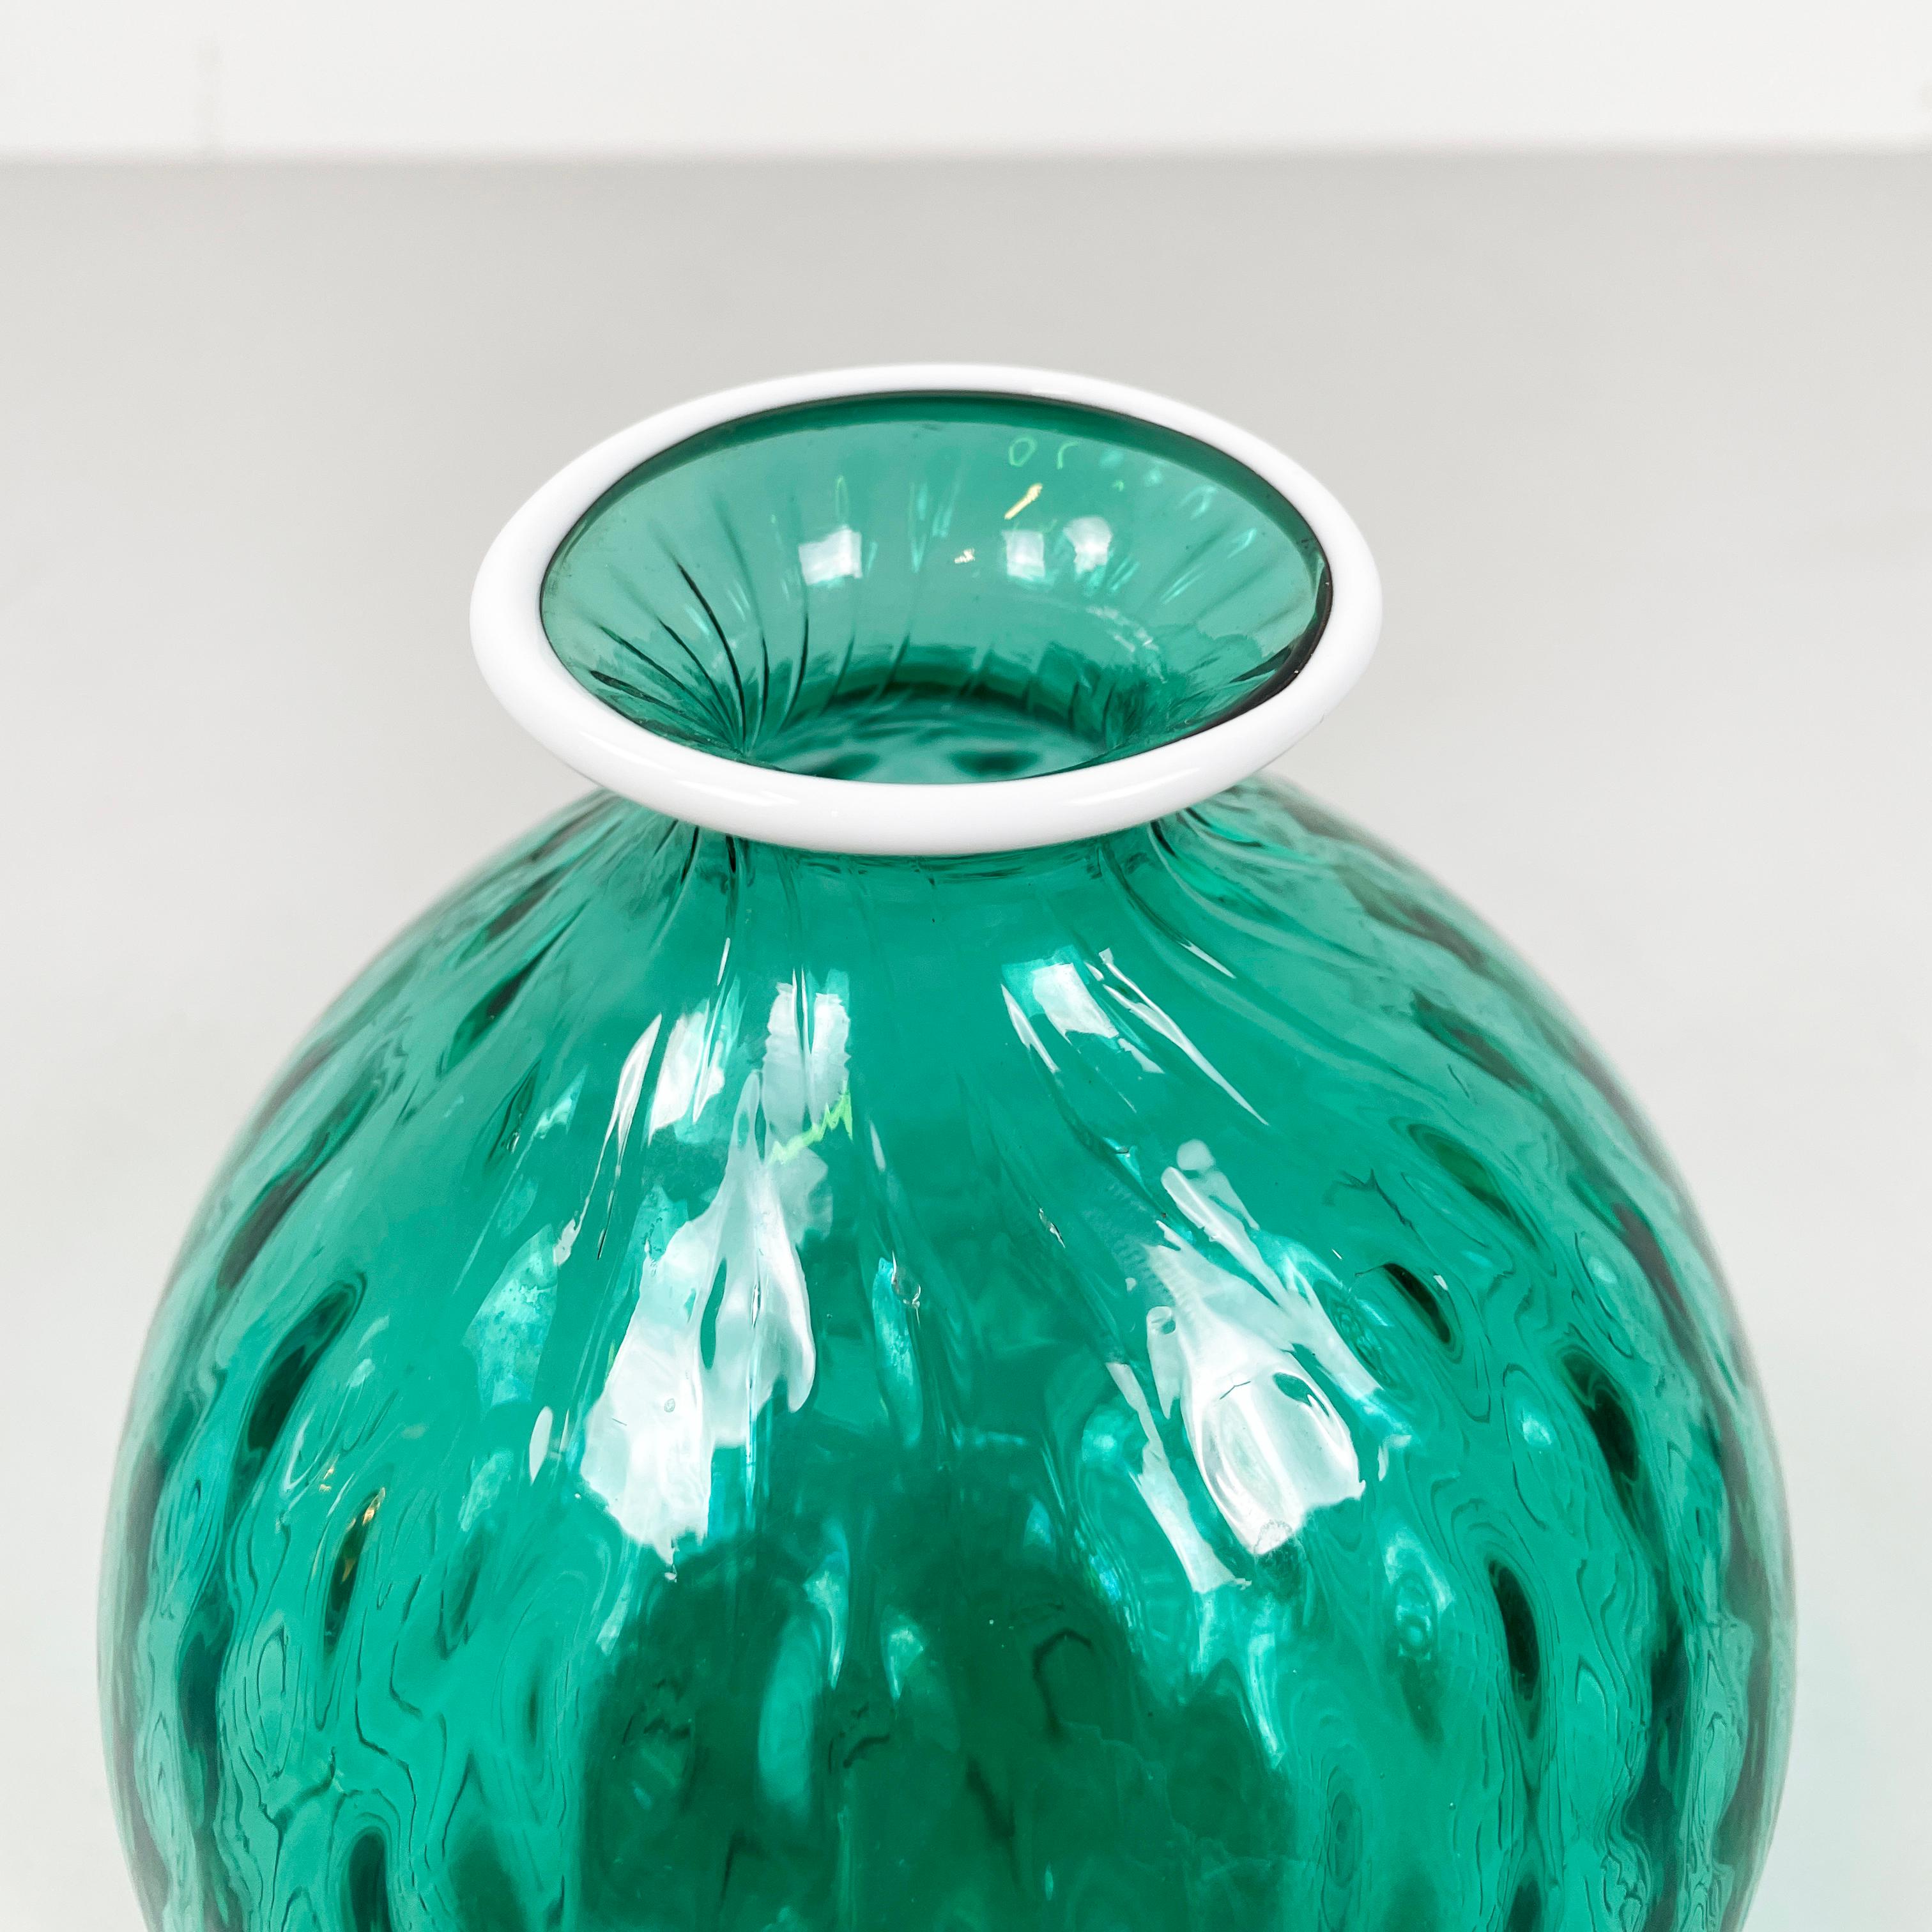 Murano Glass Italian modern round vase in green and white Murano glass by Venini 1990s For Sale